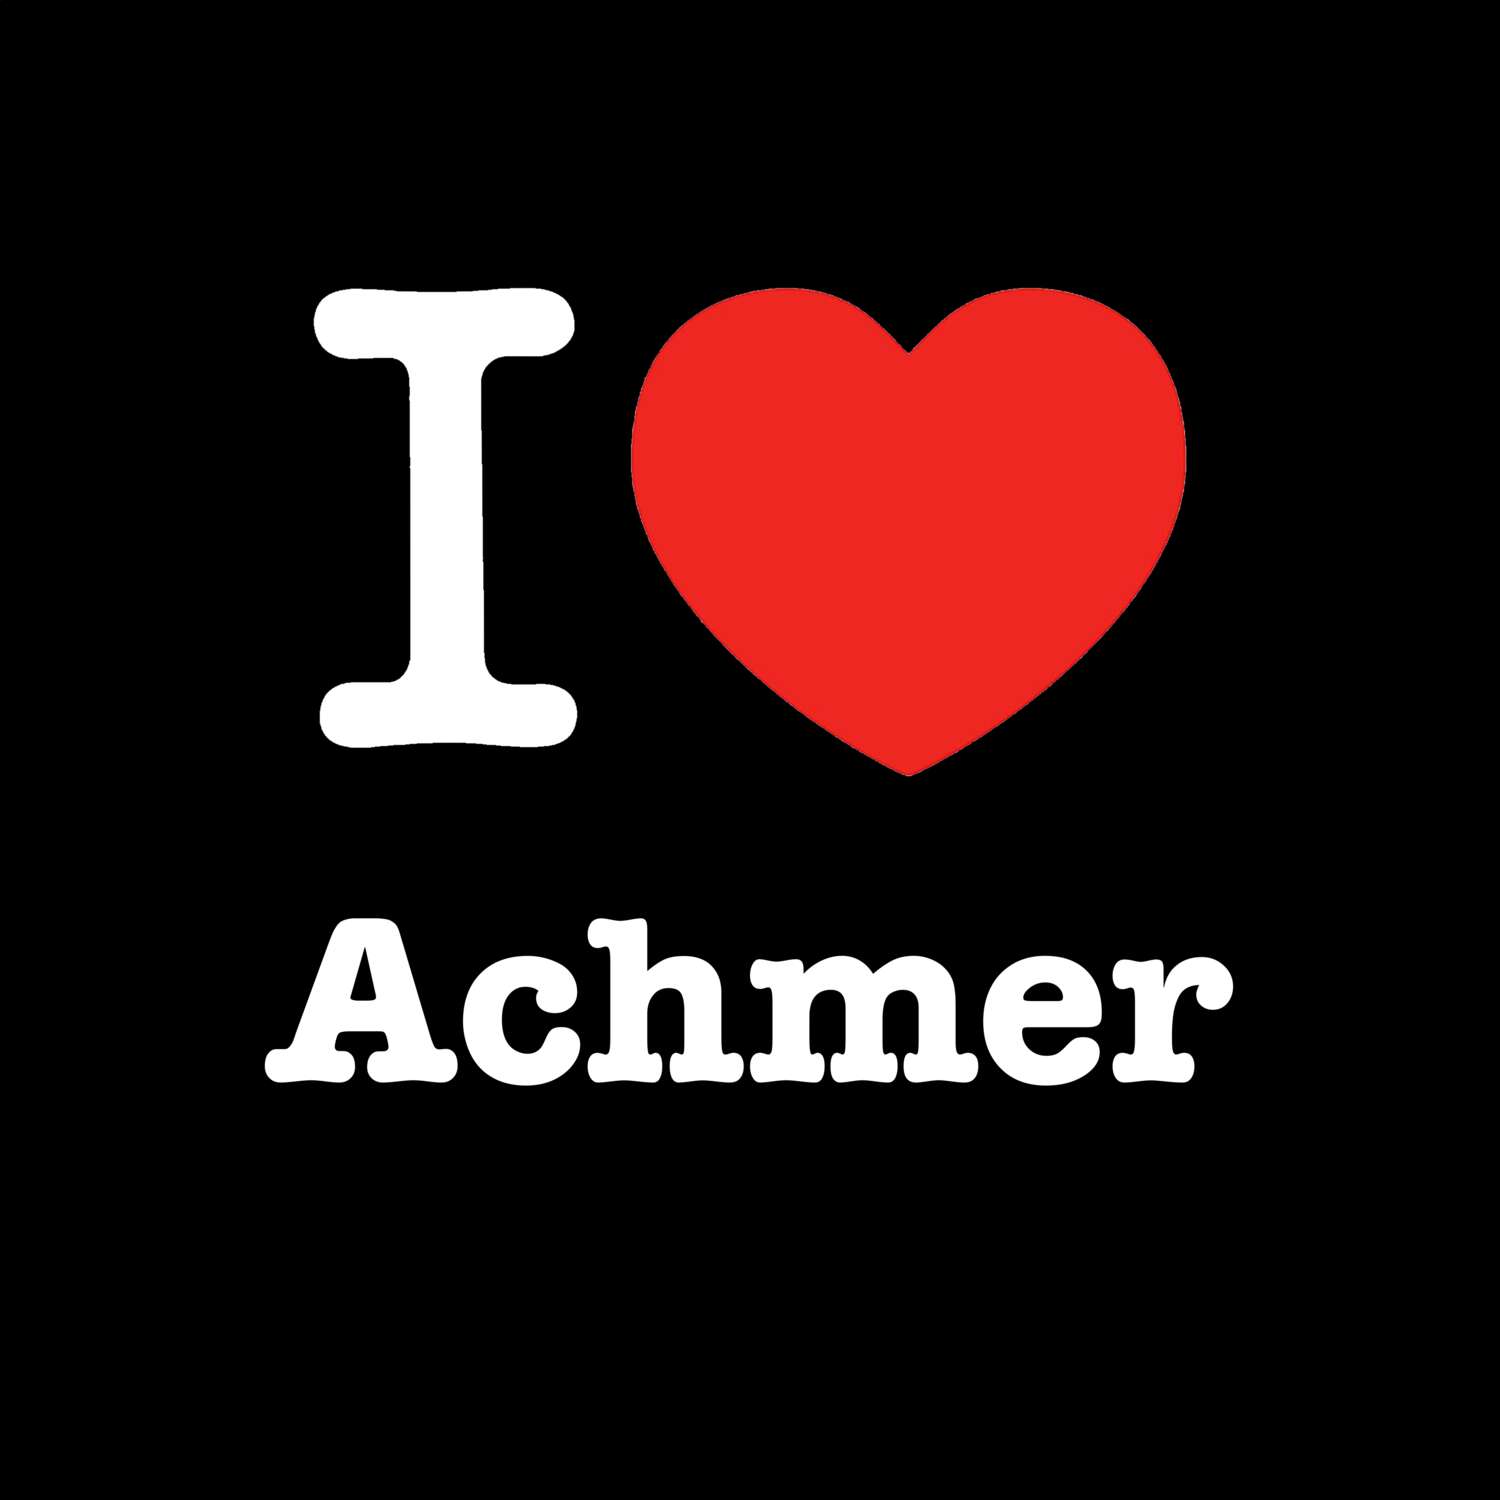 Achmer T-Shirt »I love«